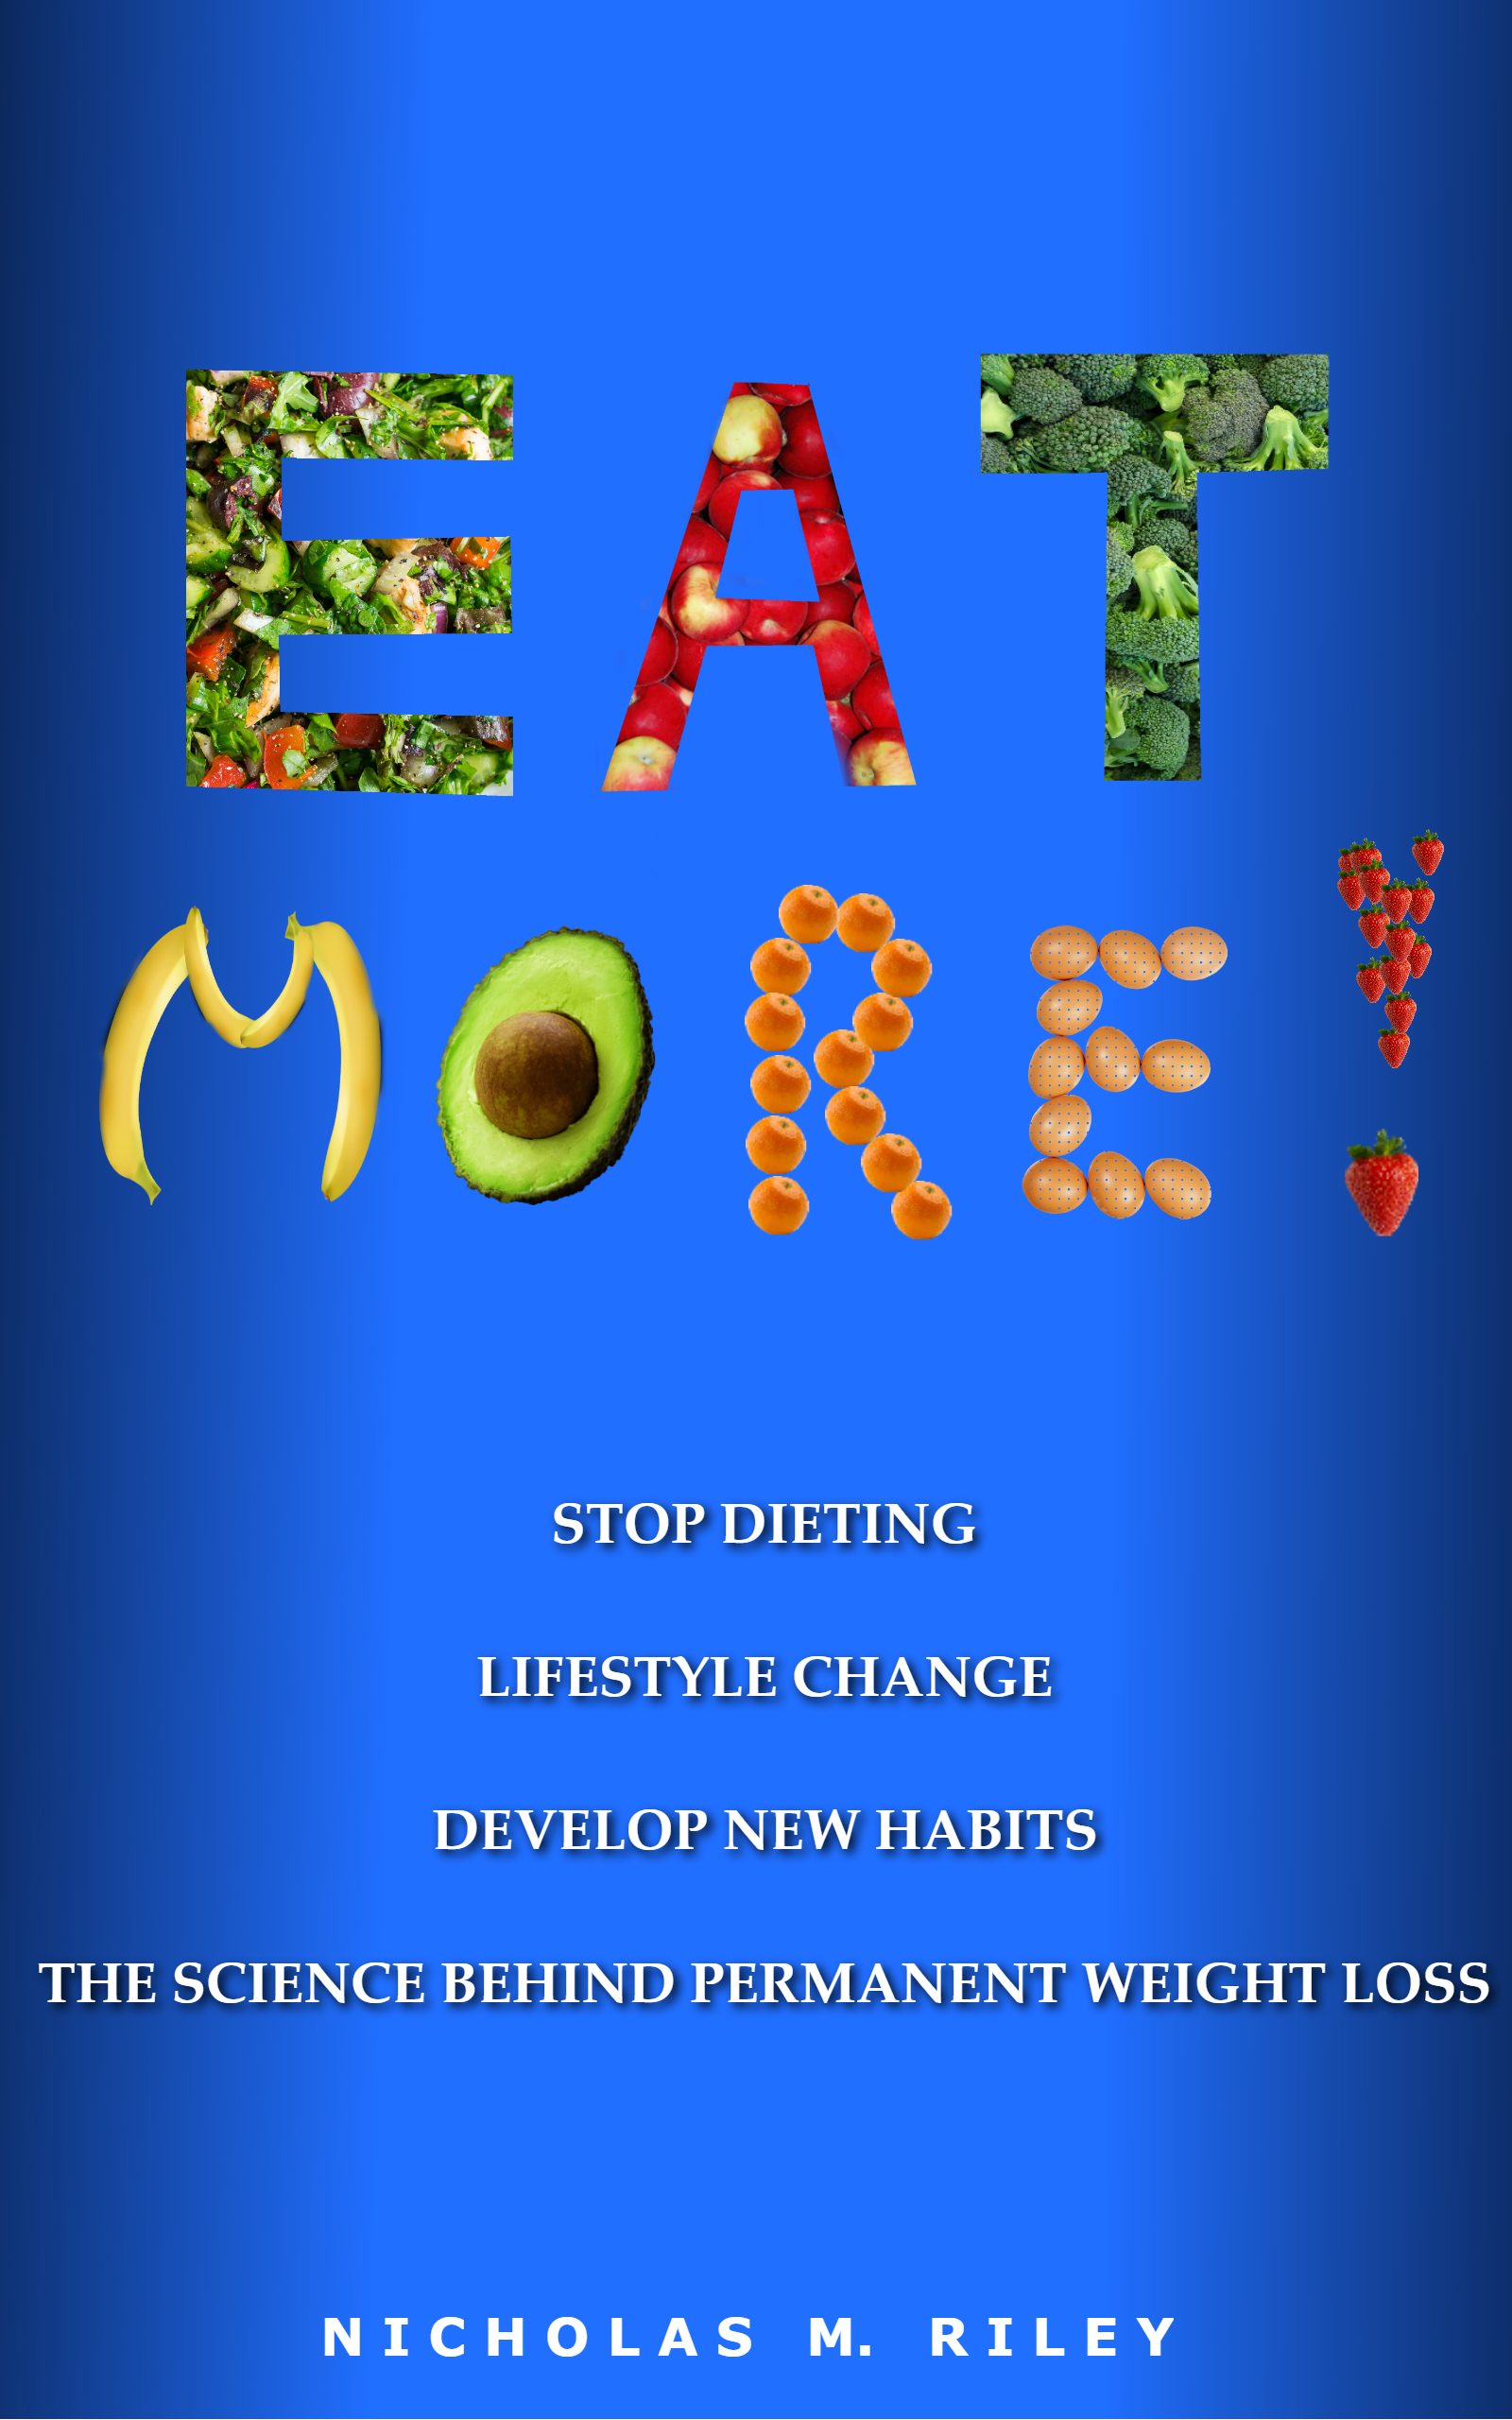 FREE: Eat More! by Nicholas Riley